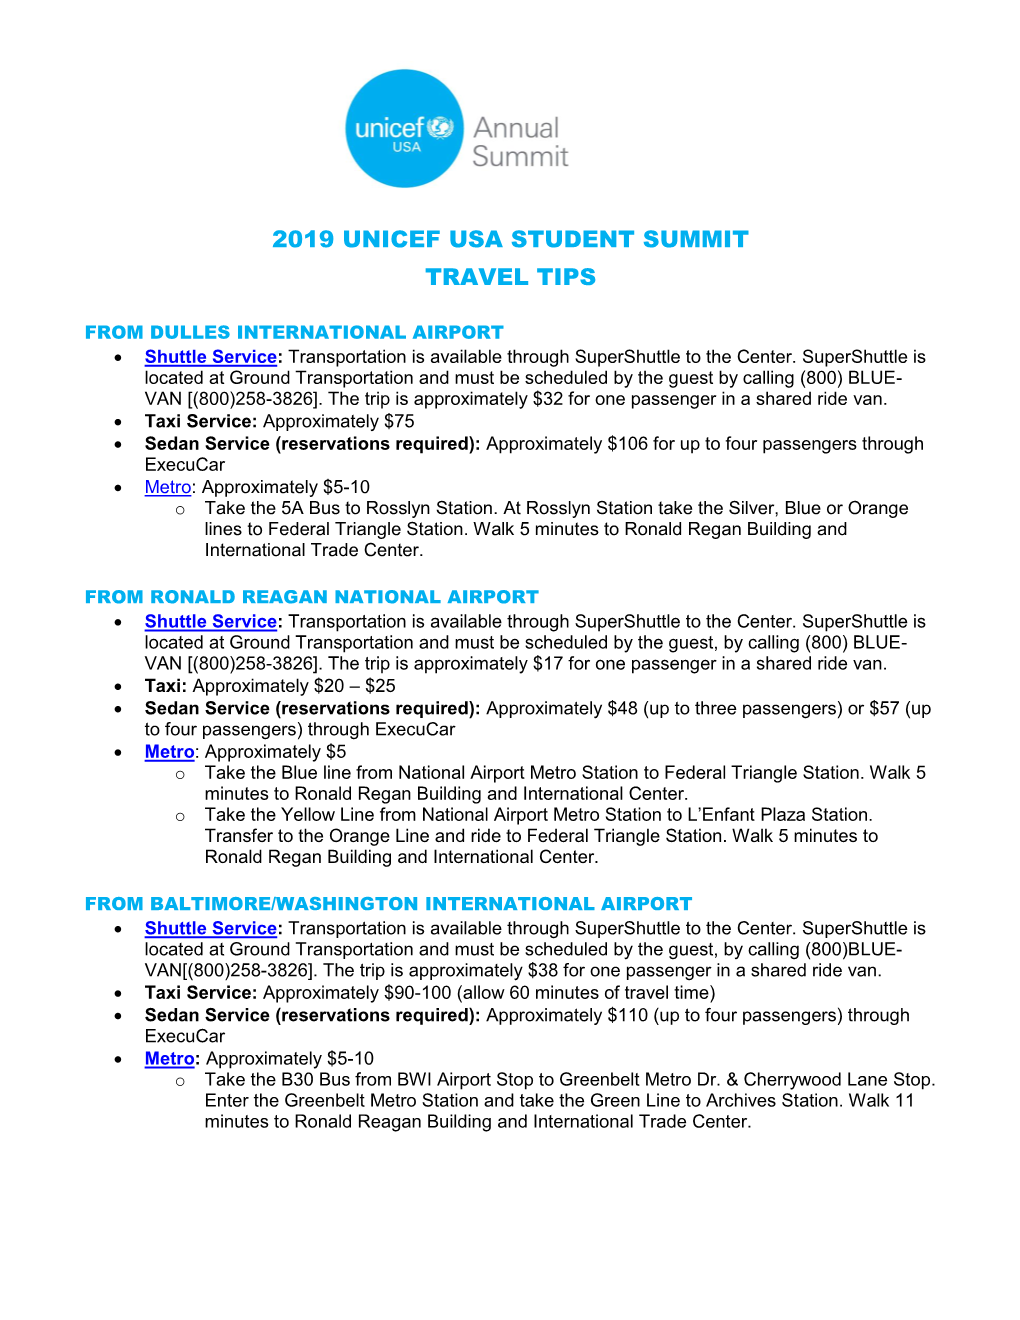 2019 Unicef Usa Student Summit Travel Tips